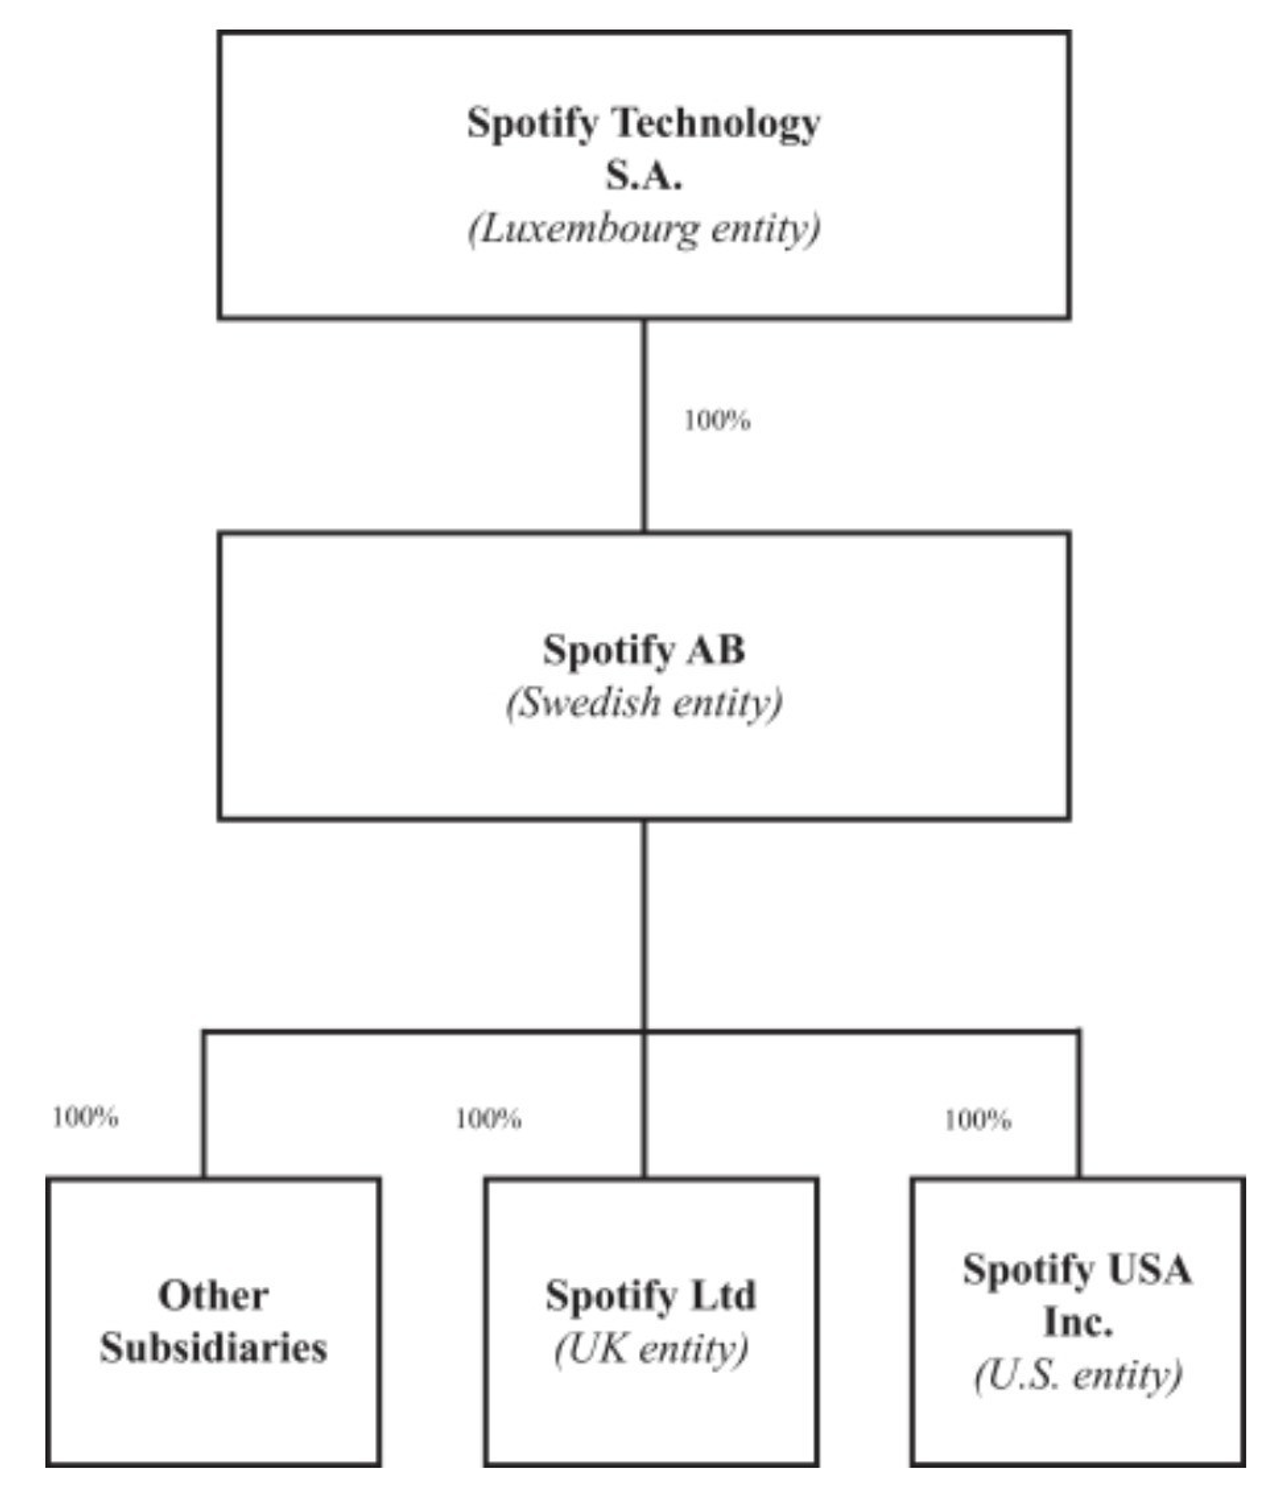 Spotifyの会社組織図